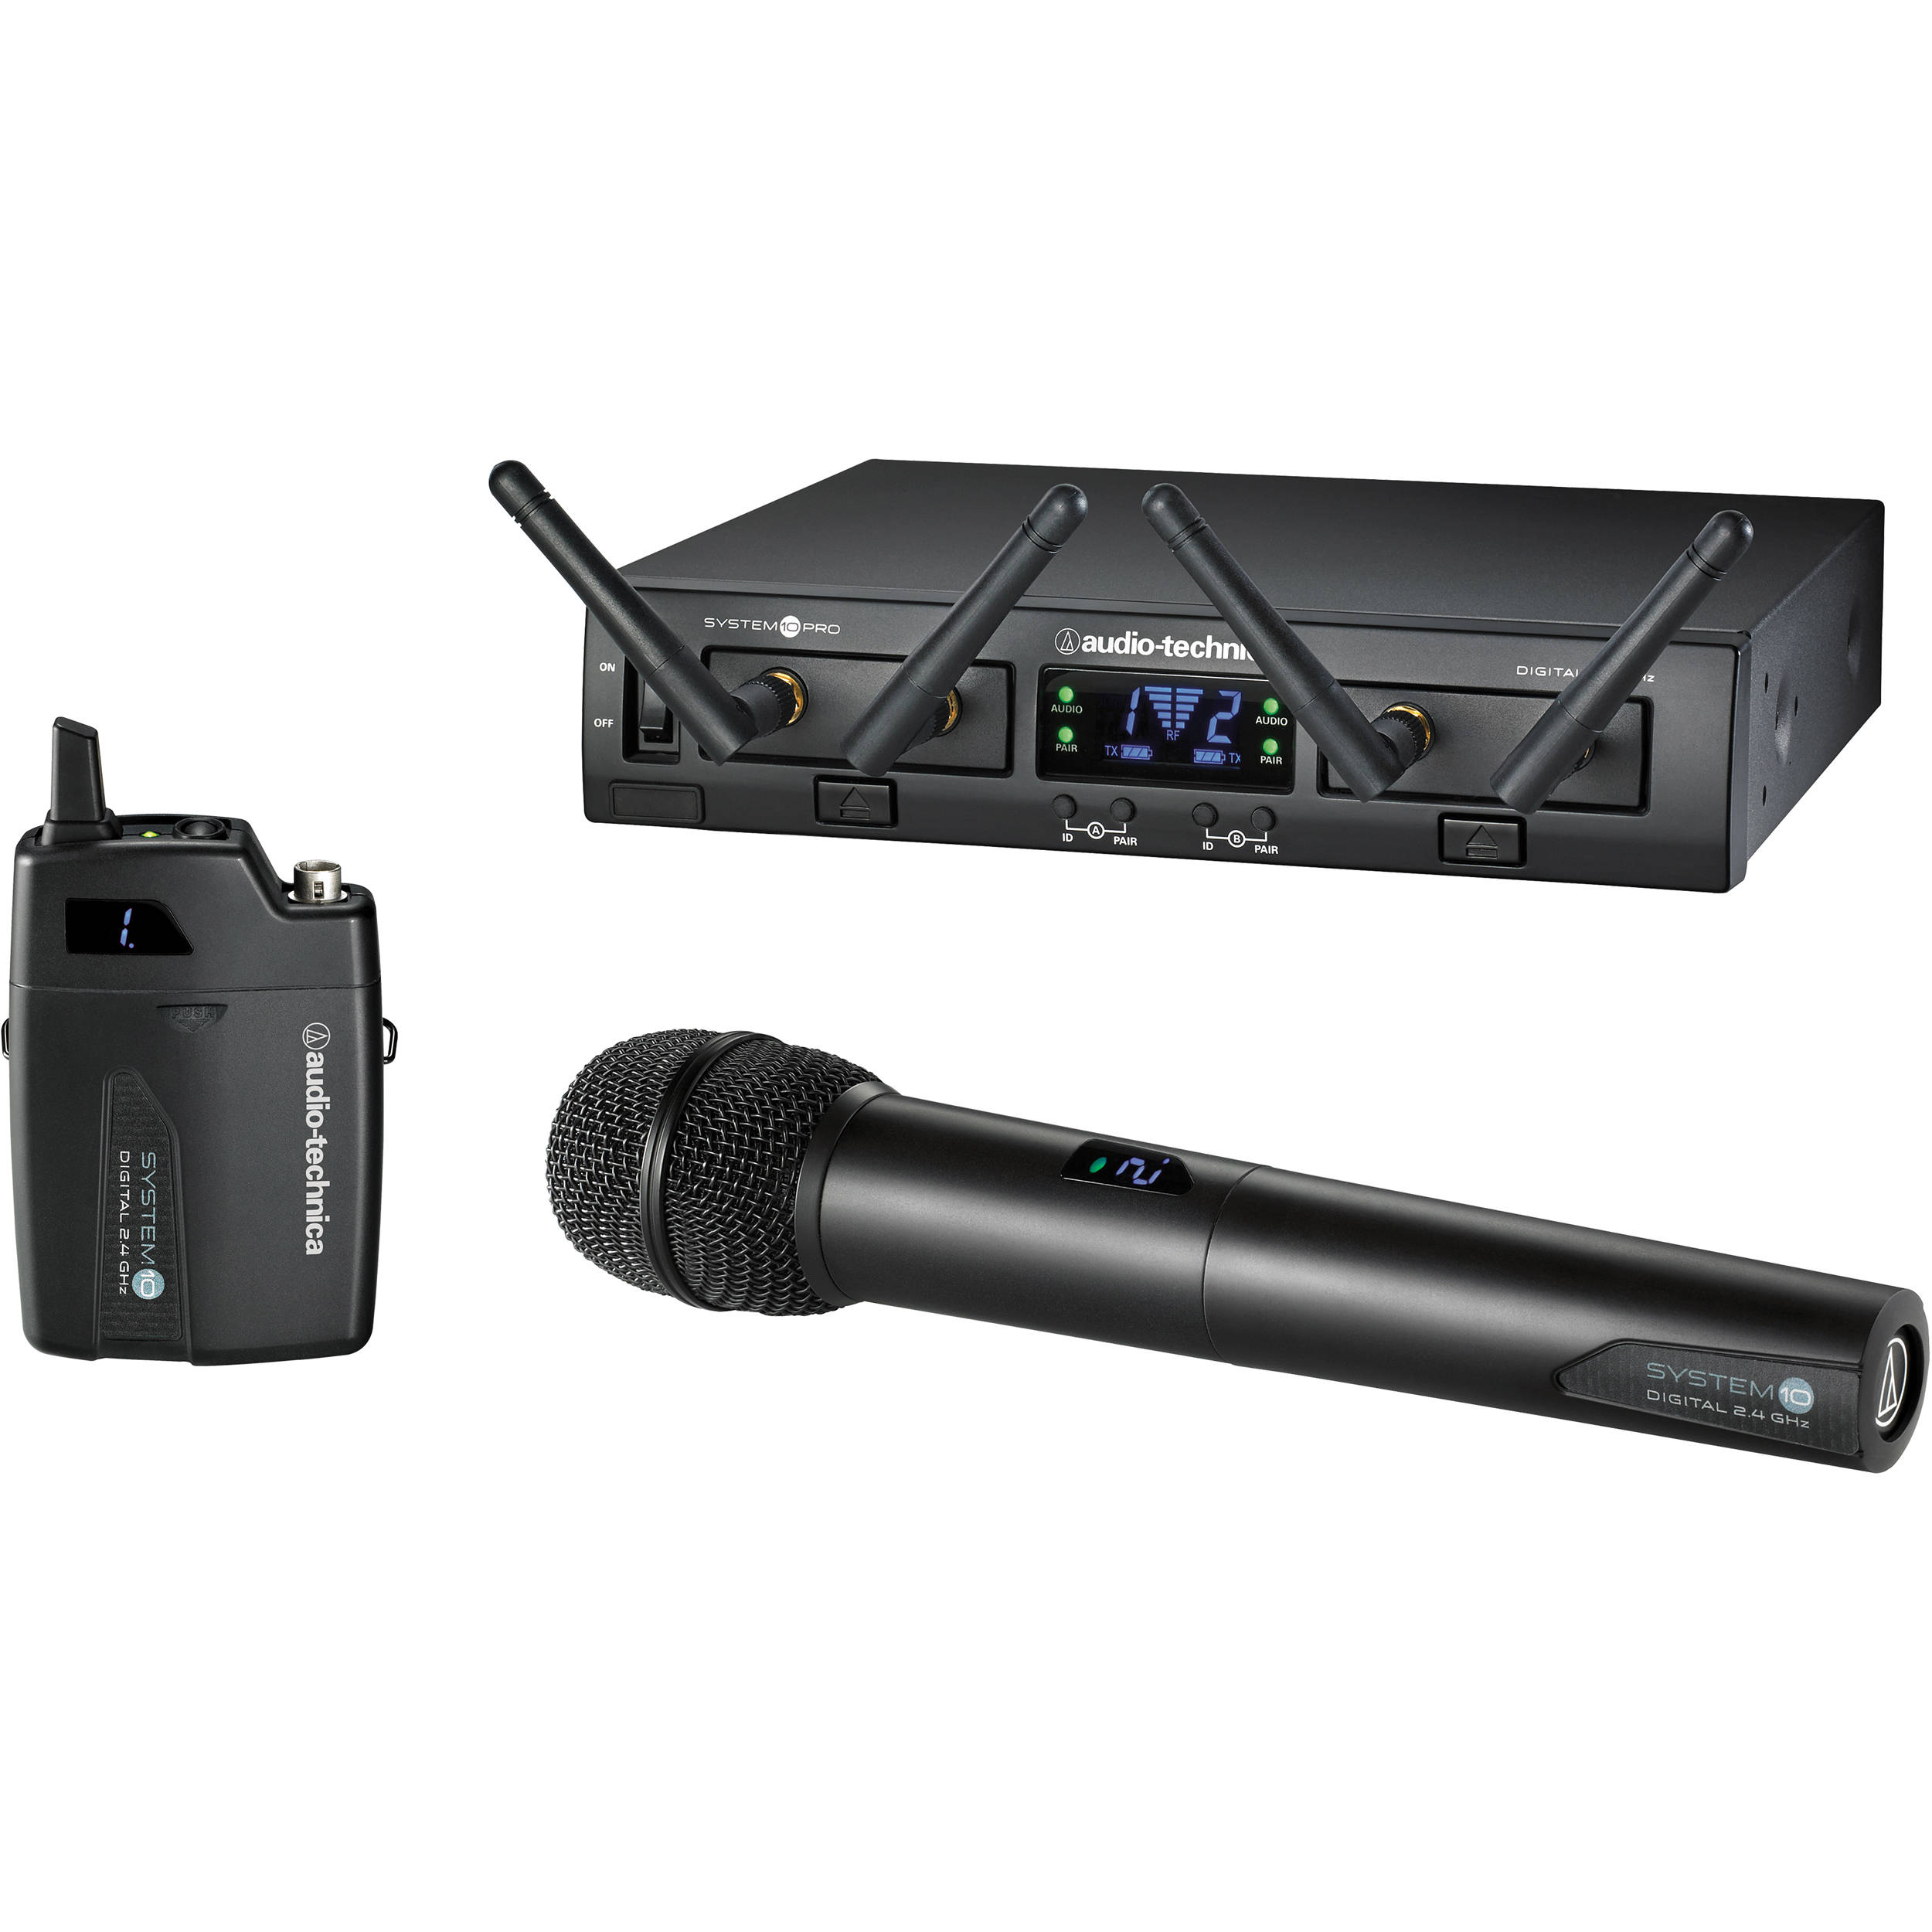 Audio-Technica ATW-1312 System 10 PRO Digital Wireless System Review